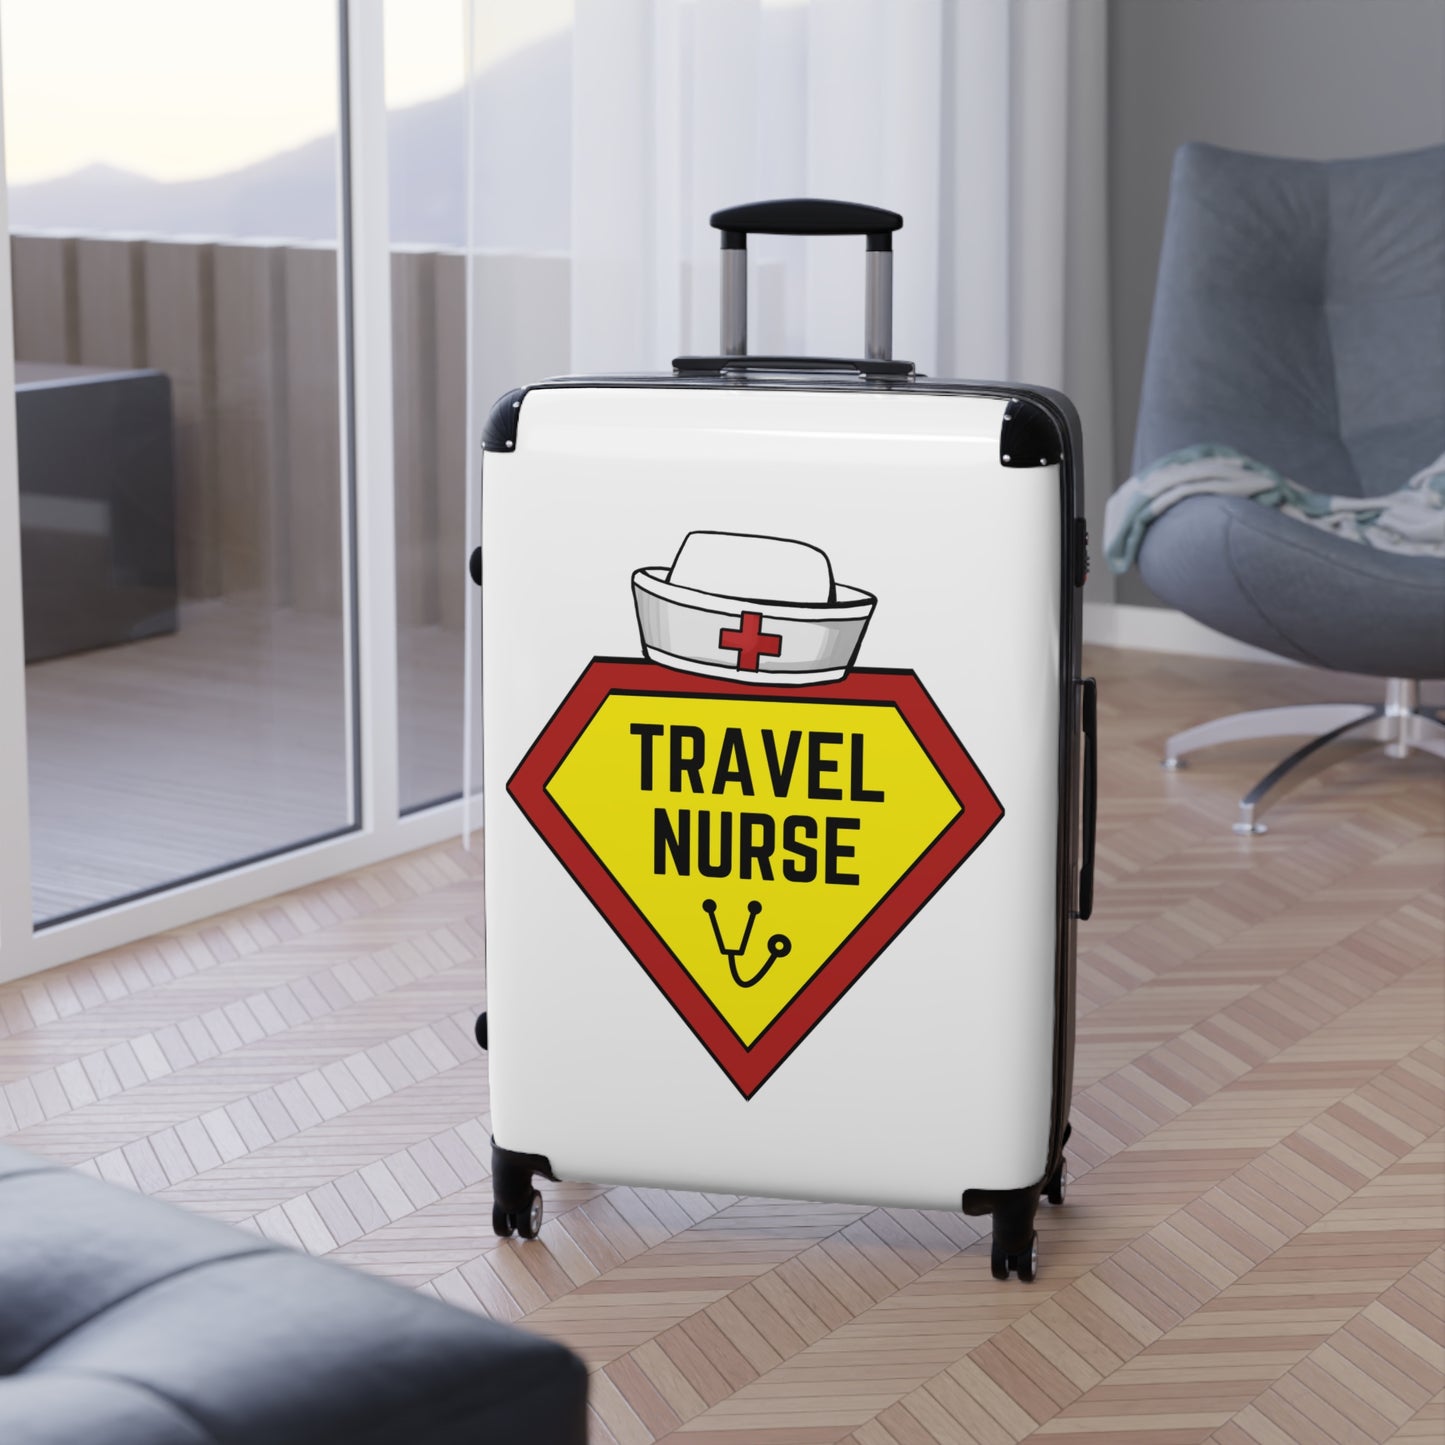 Travel Nurse Suitcase - White